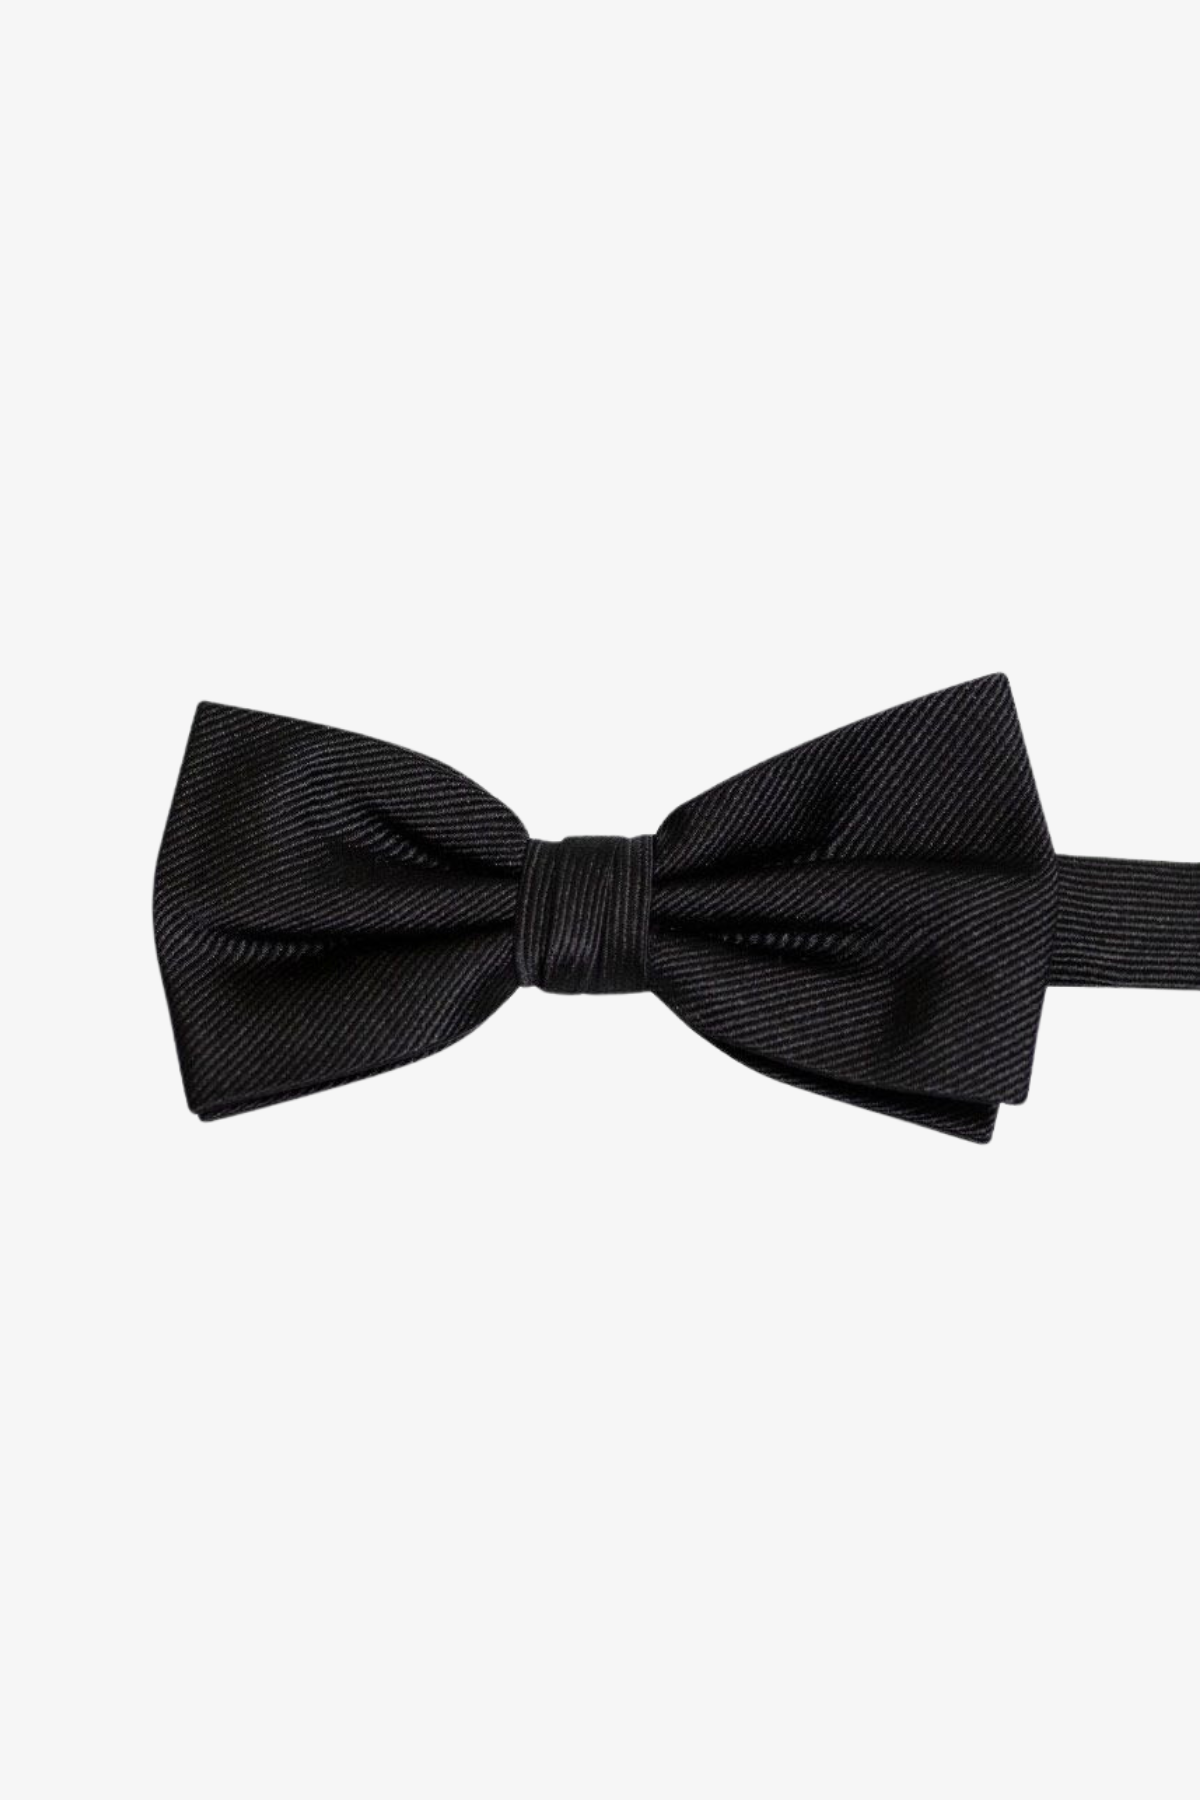 Bow tie - Black Repp Weave